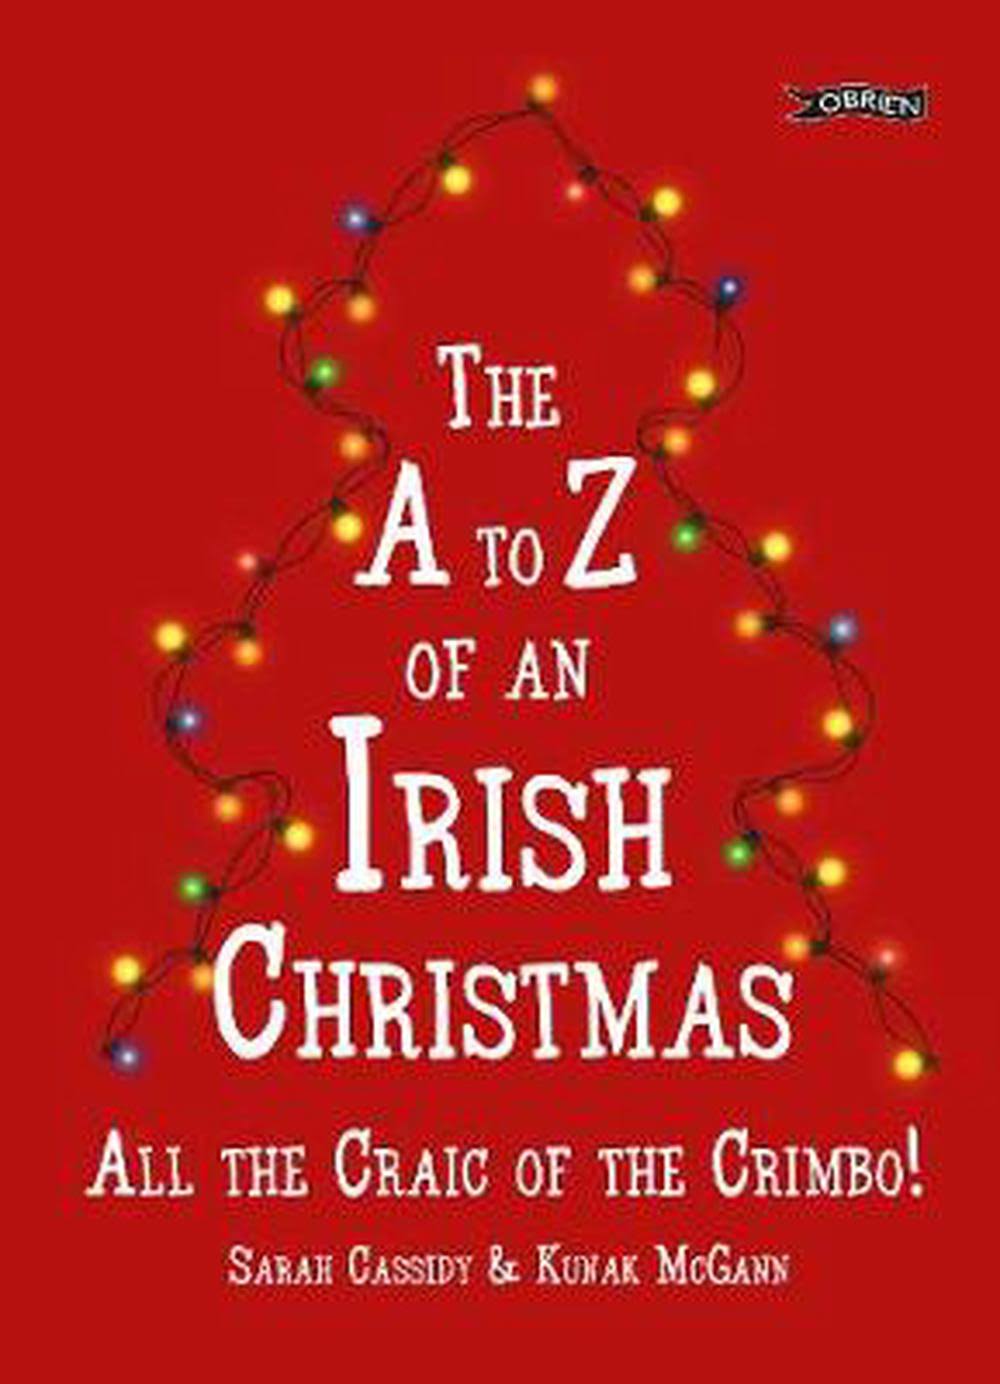 A-Z of an Irish Christmas [Book]